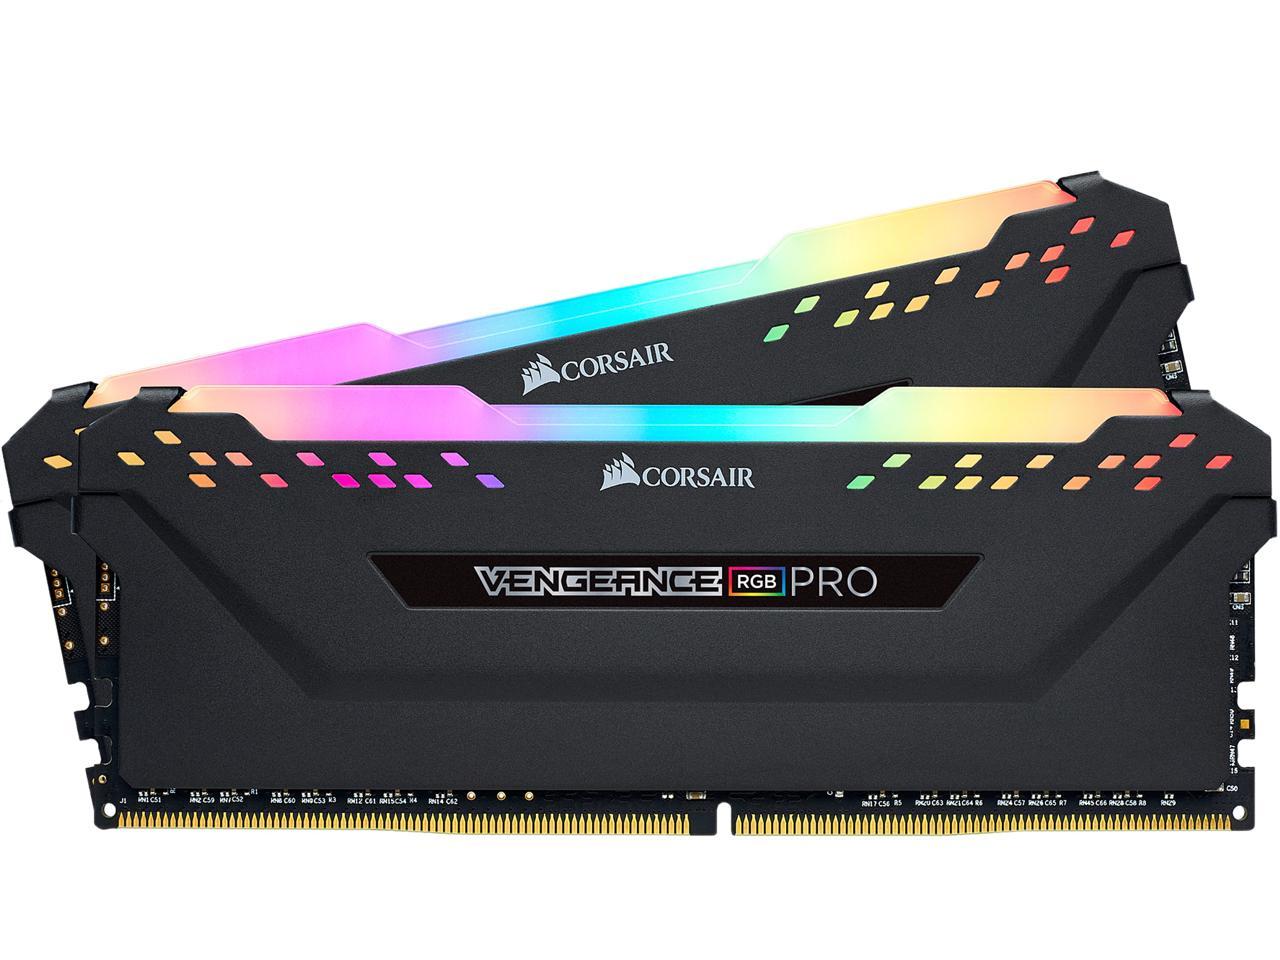 Corsair Vengeance RGB PRO 16GB (2x8GB) DDR4 3200MHz C16 LED Desktop Memory - Black - image 1 of 6